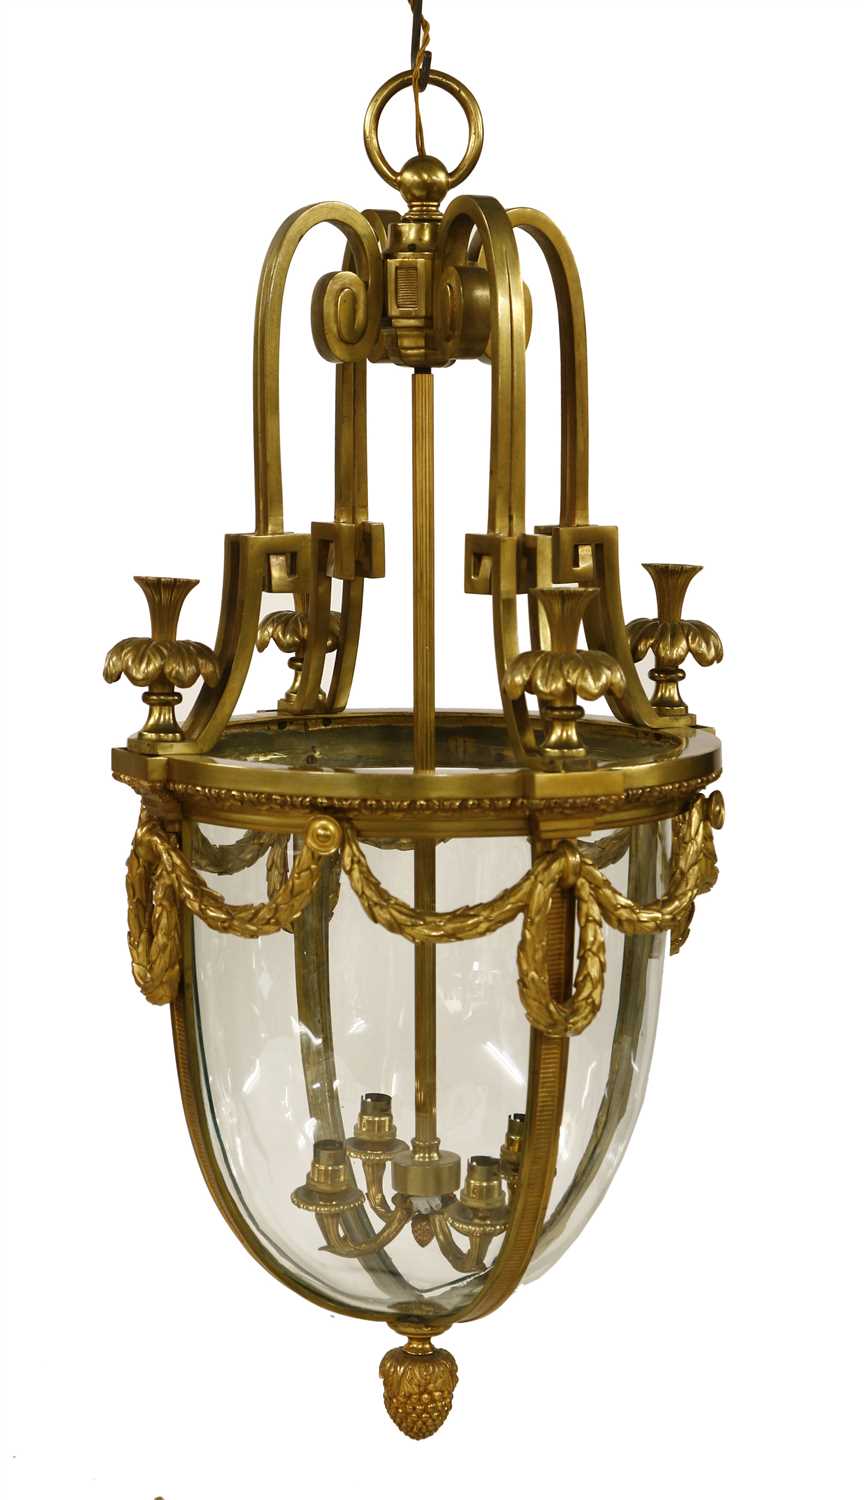 A large Louis XVI-style ormolu and glass hall lantern, - Image 2 of 2